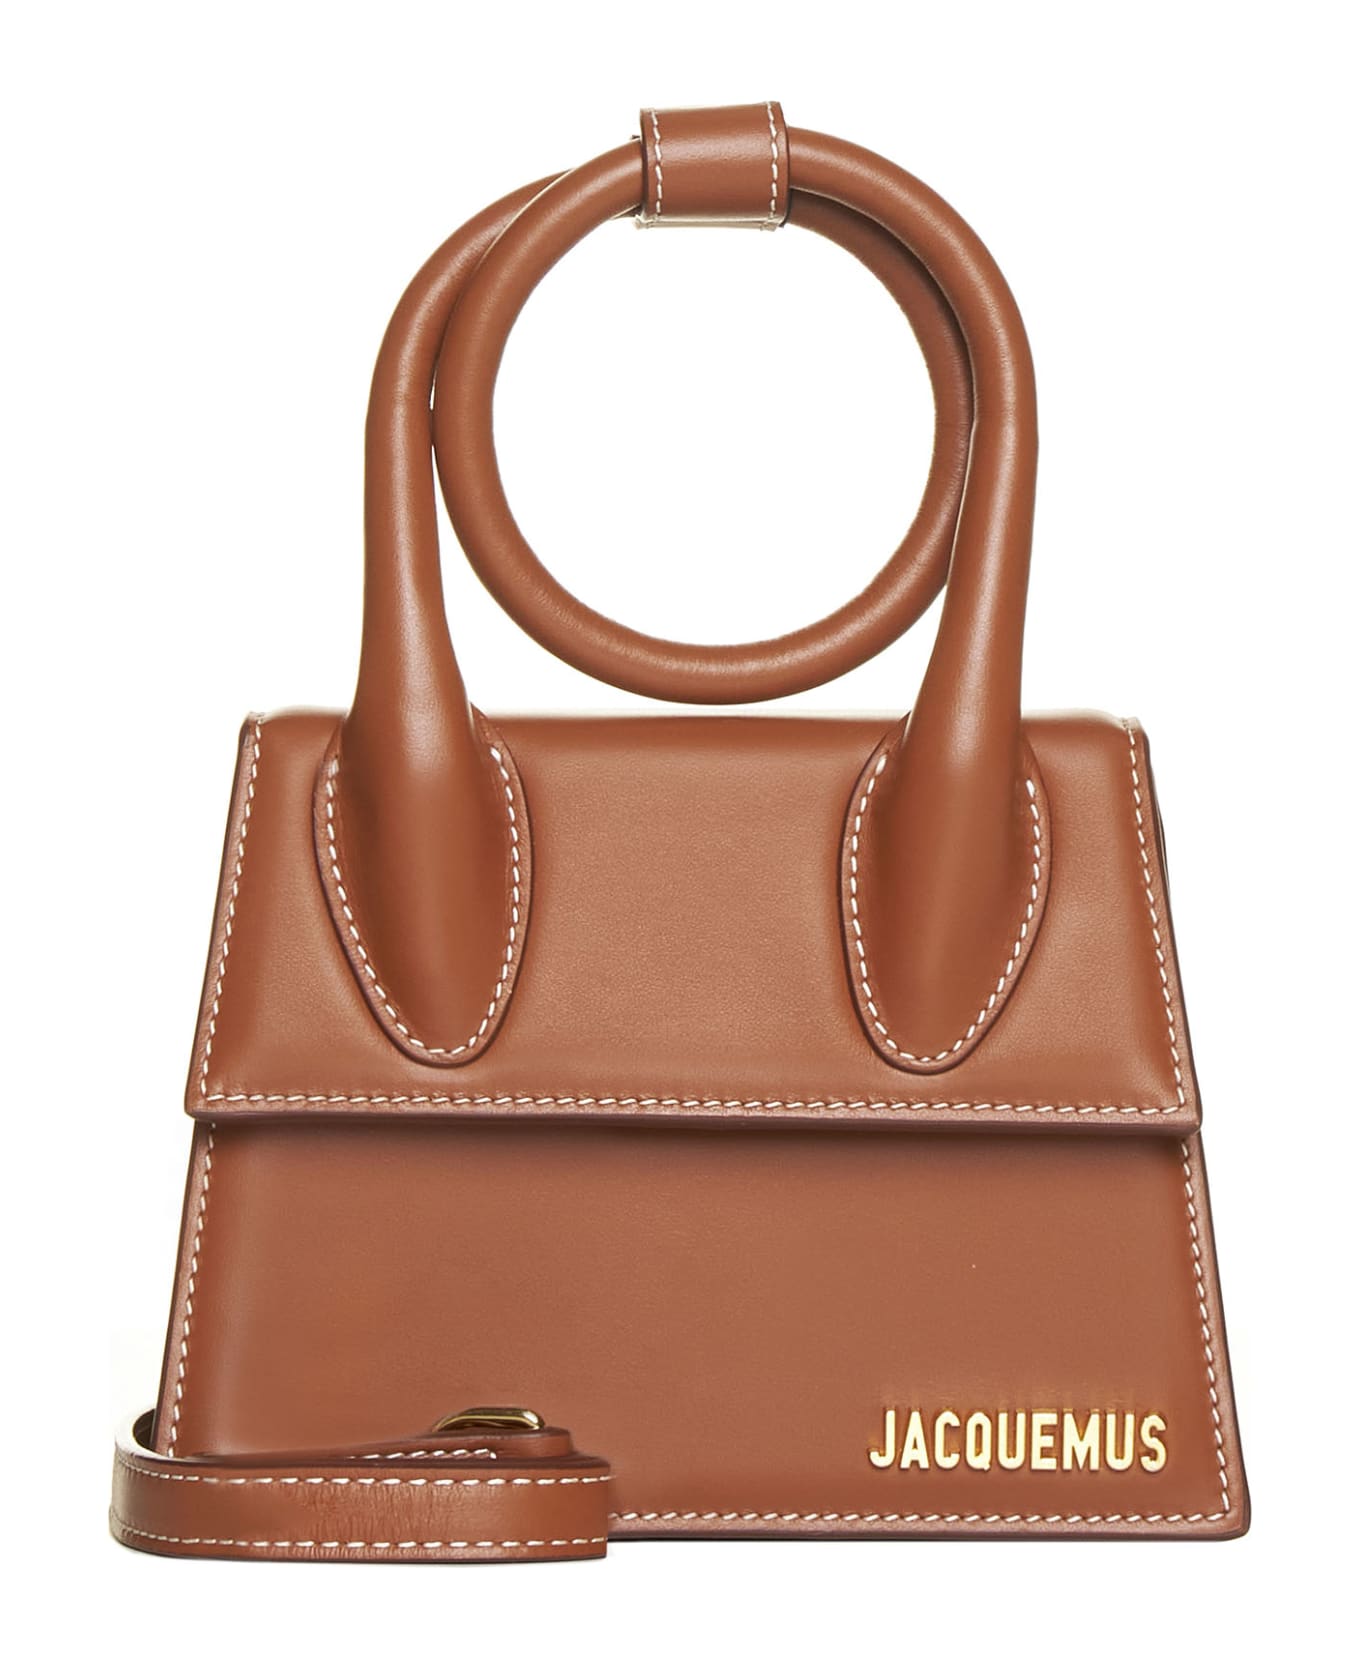 Jacquemus Le Chiquito Noeud Bag - Ligh brown